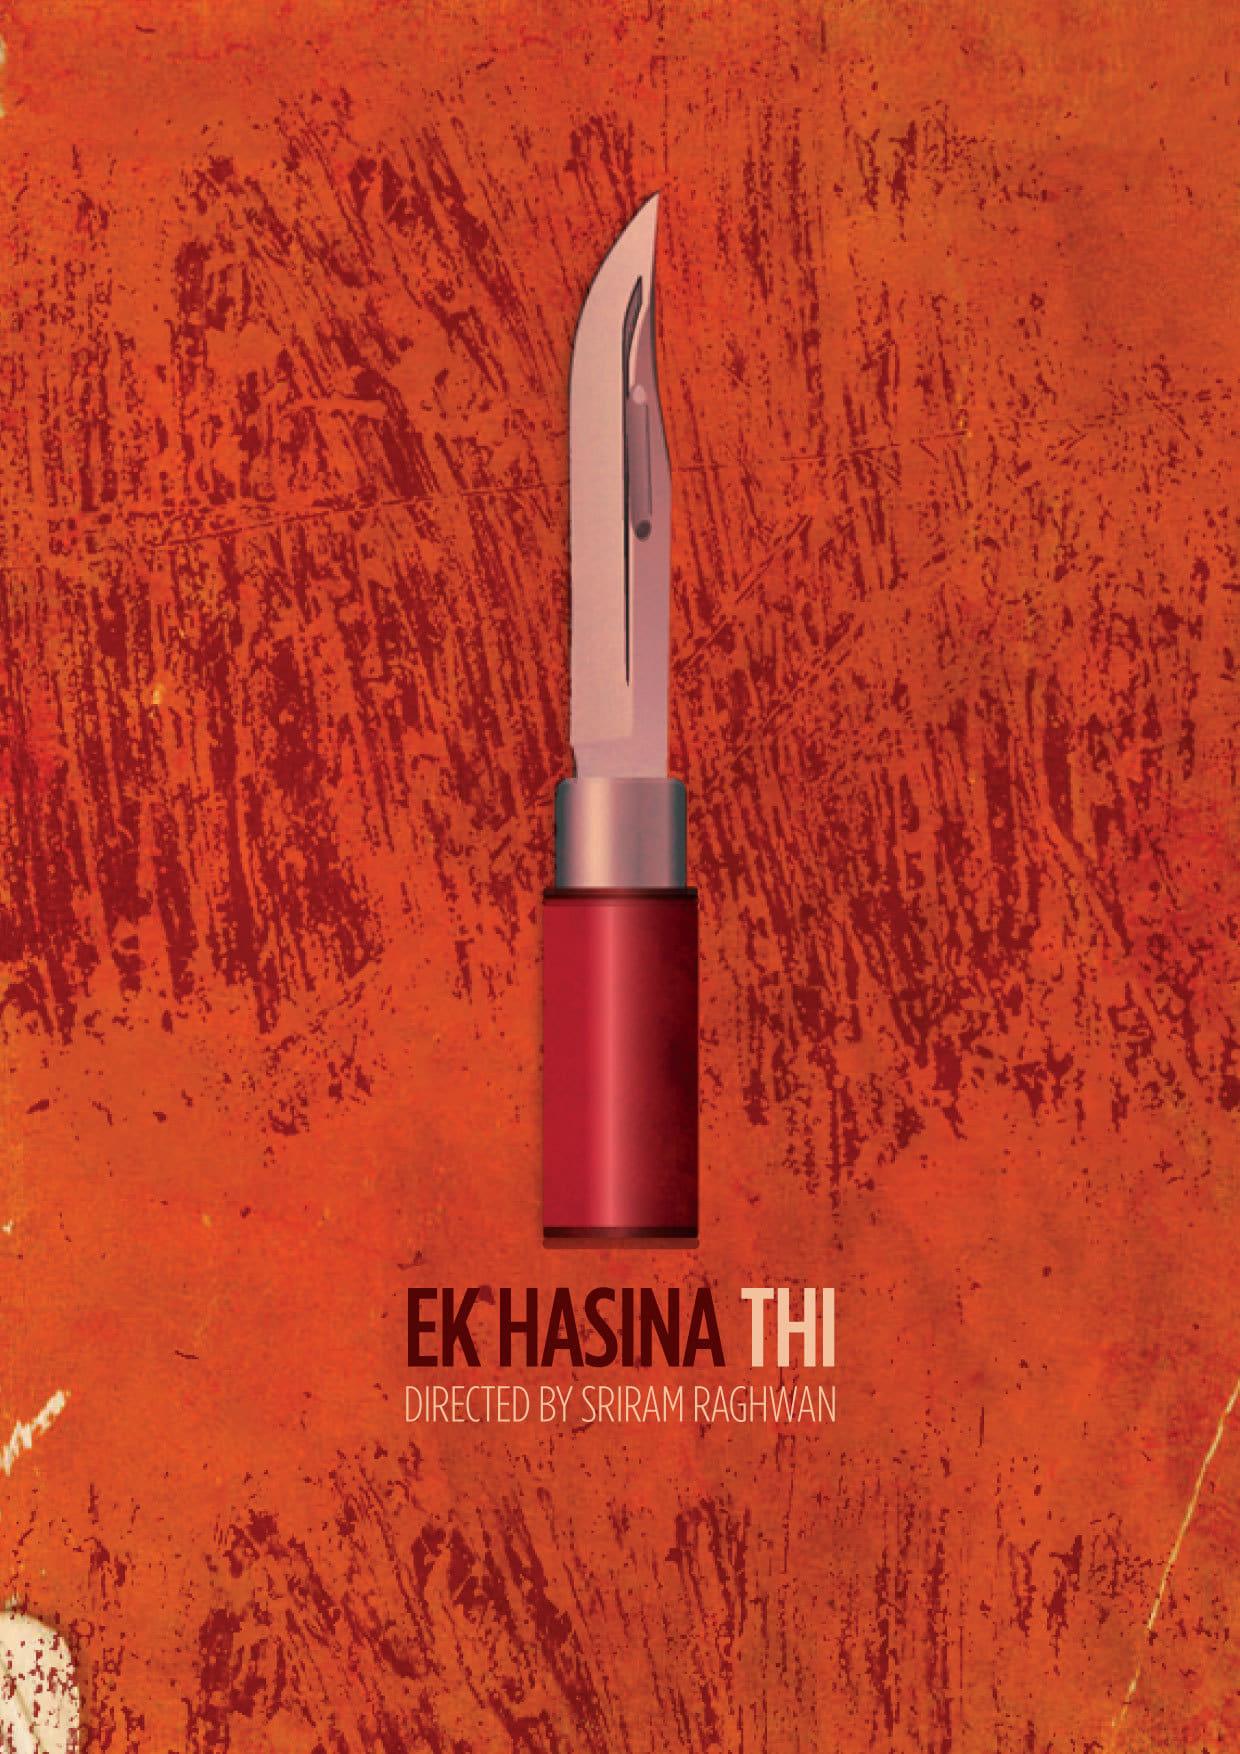 Ek Hasina Thi poster